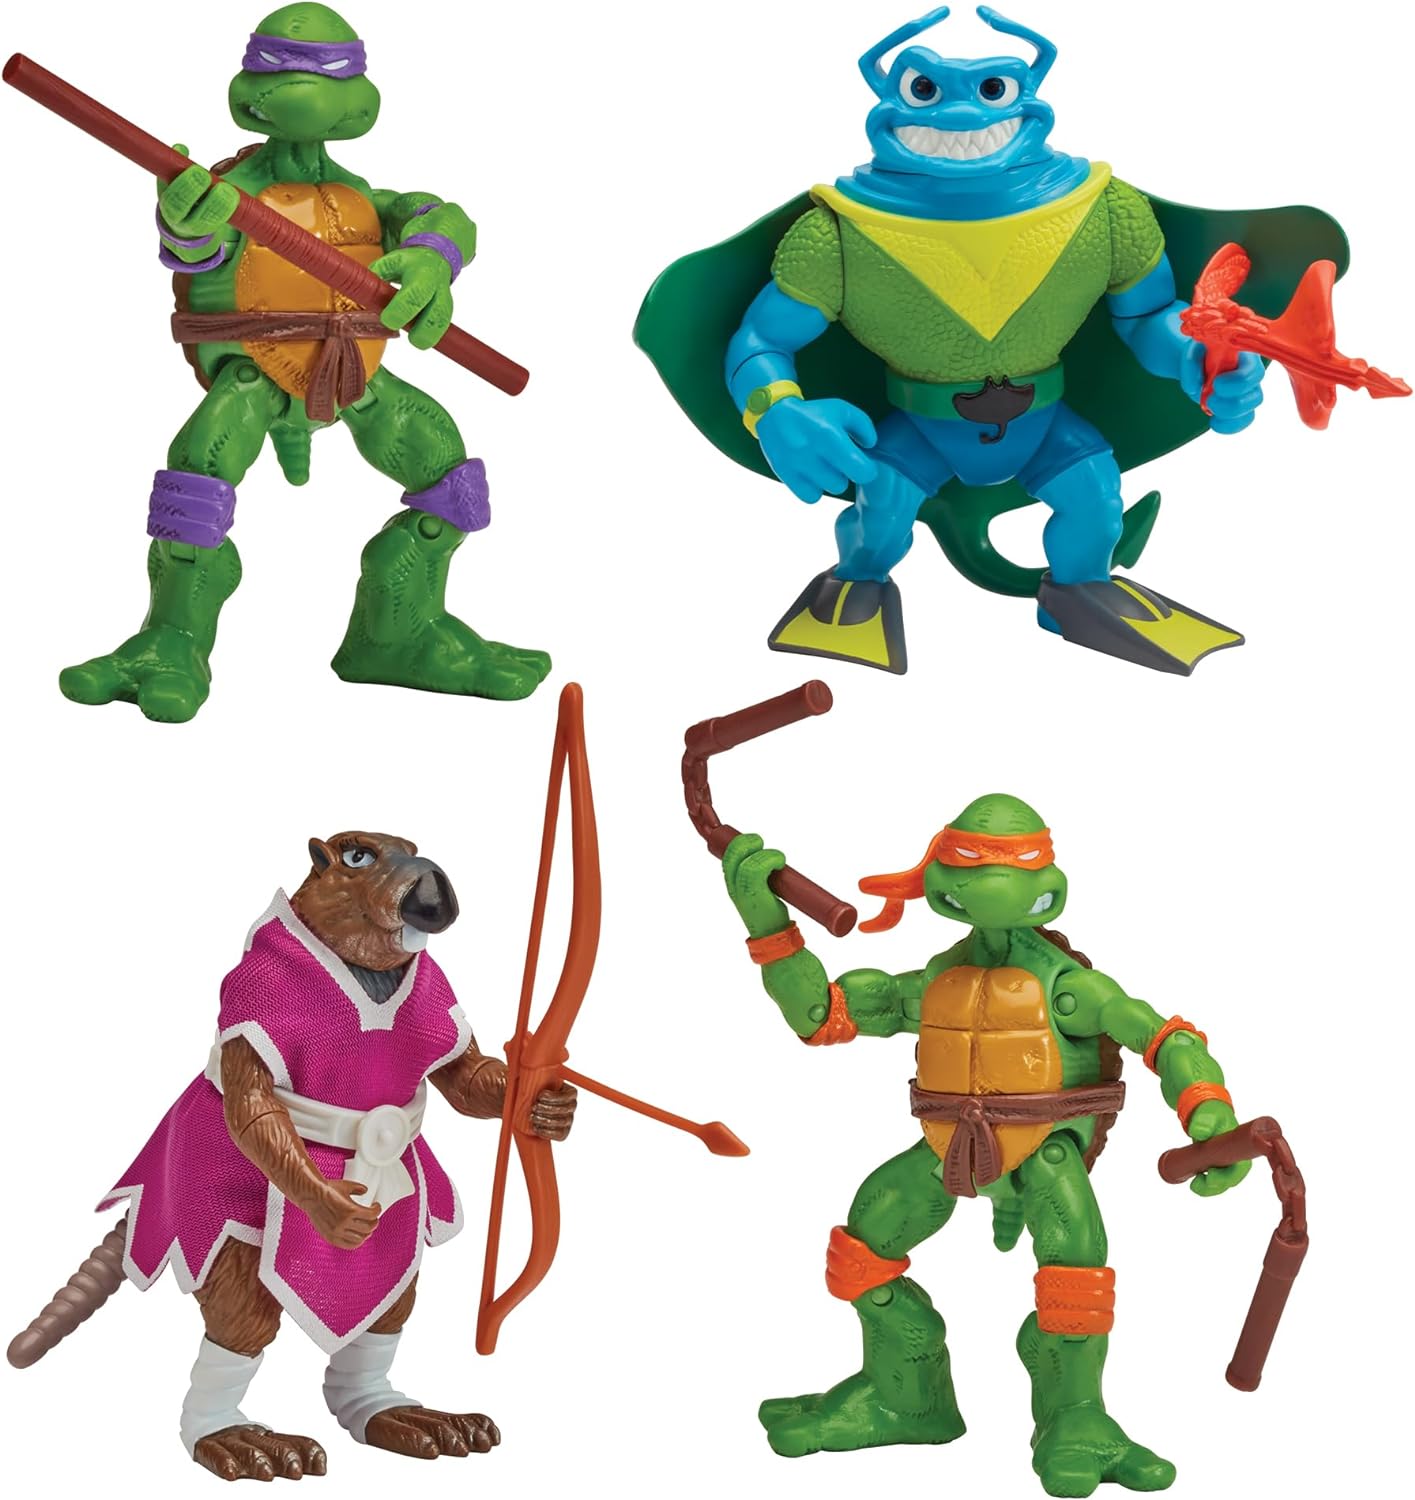 Playmates Toys Teenage Mutant Ninja Turtles: Classic Adventure Heroes Collection Series 2 Amazon Exclusive